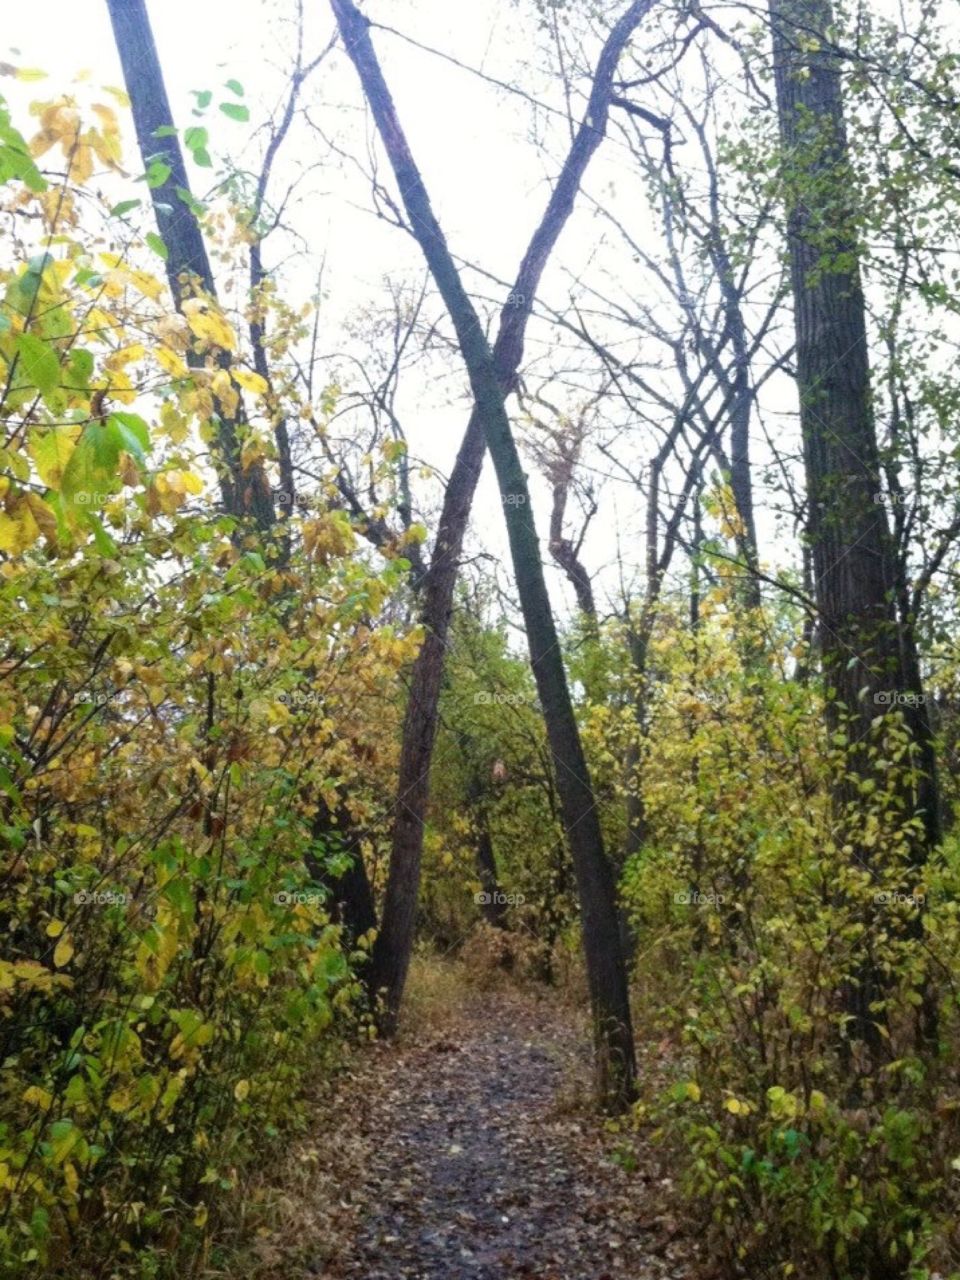 Nature walks in fall